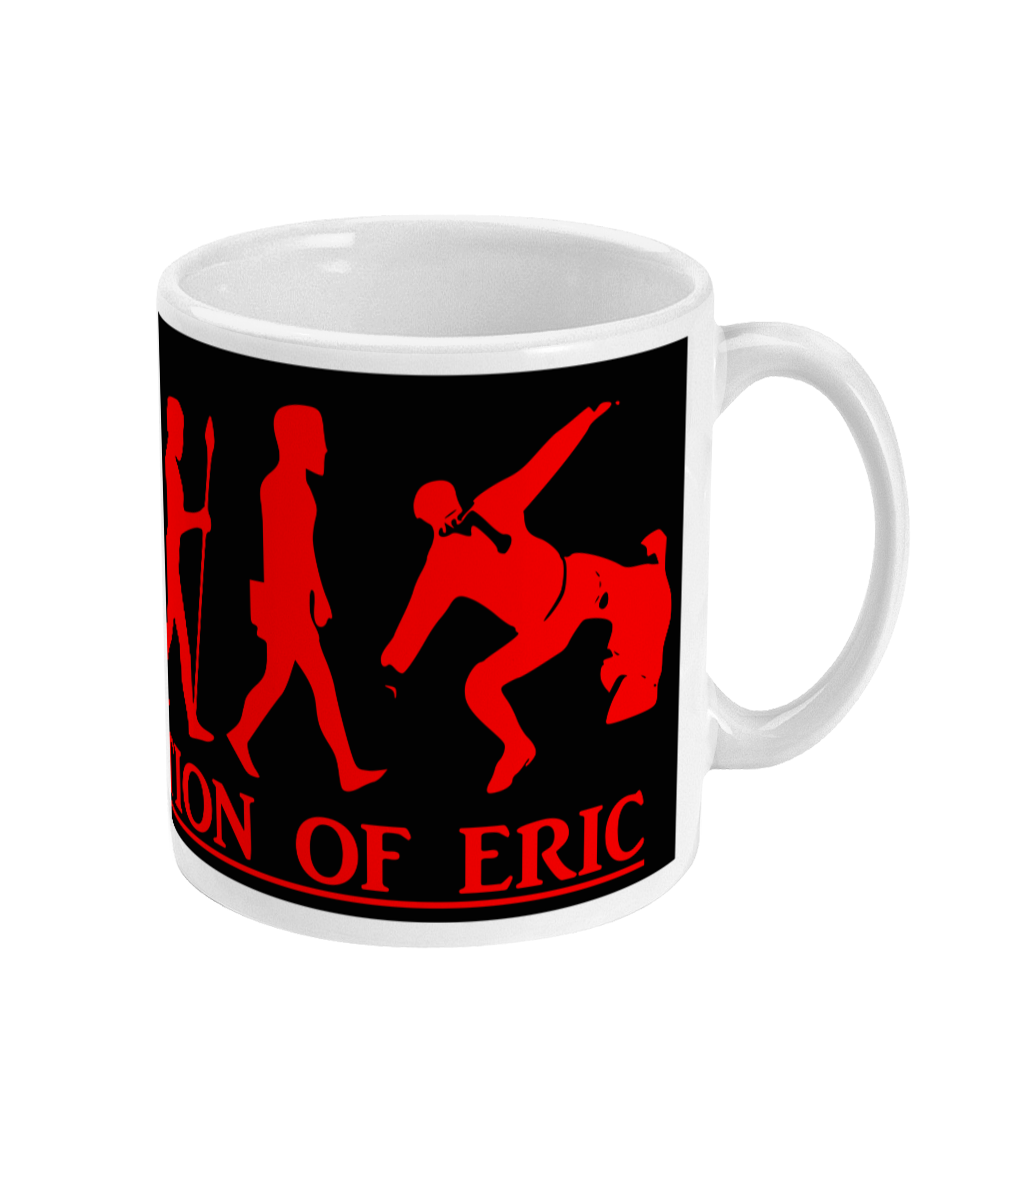 The Evolution of Eric Cantona - Mug